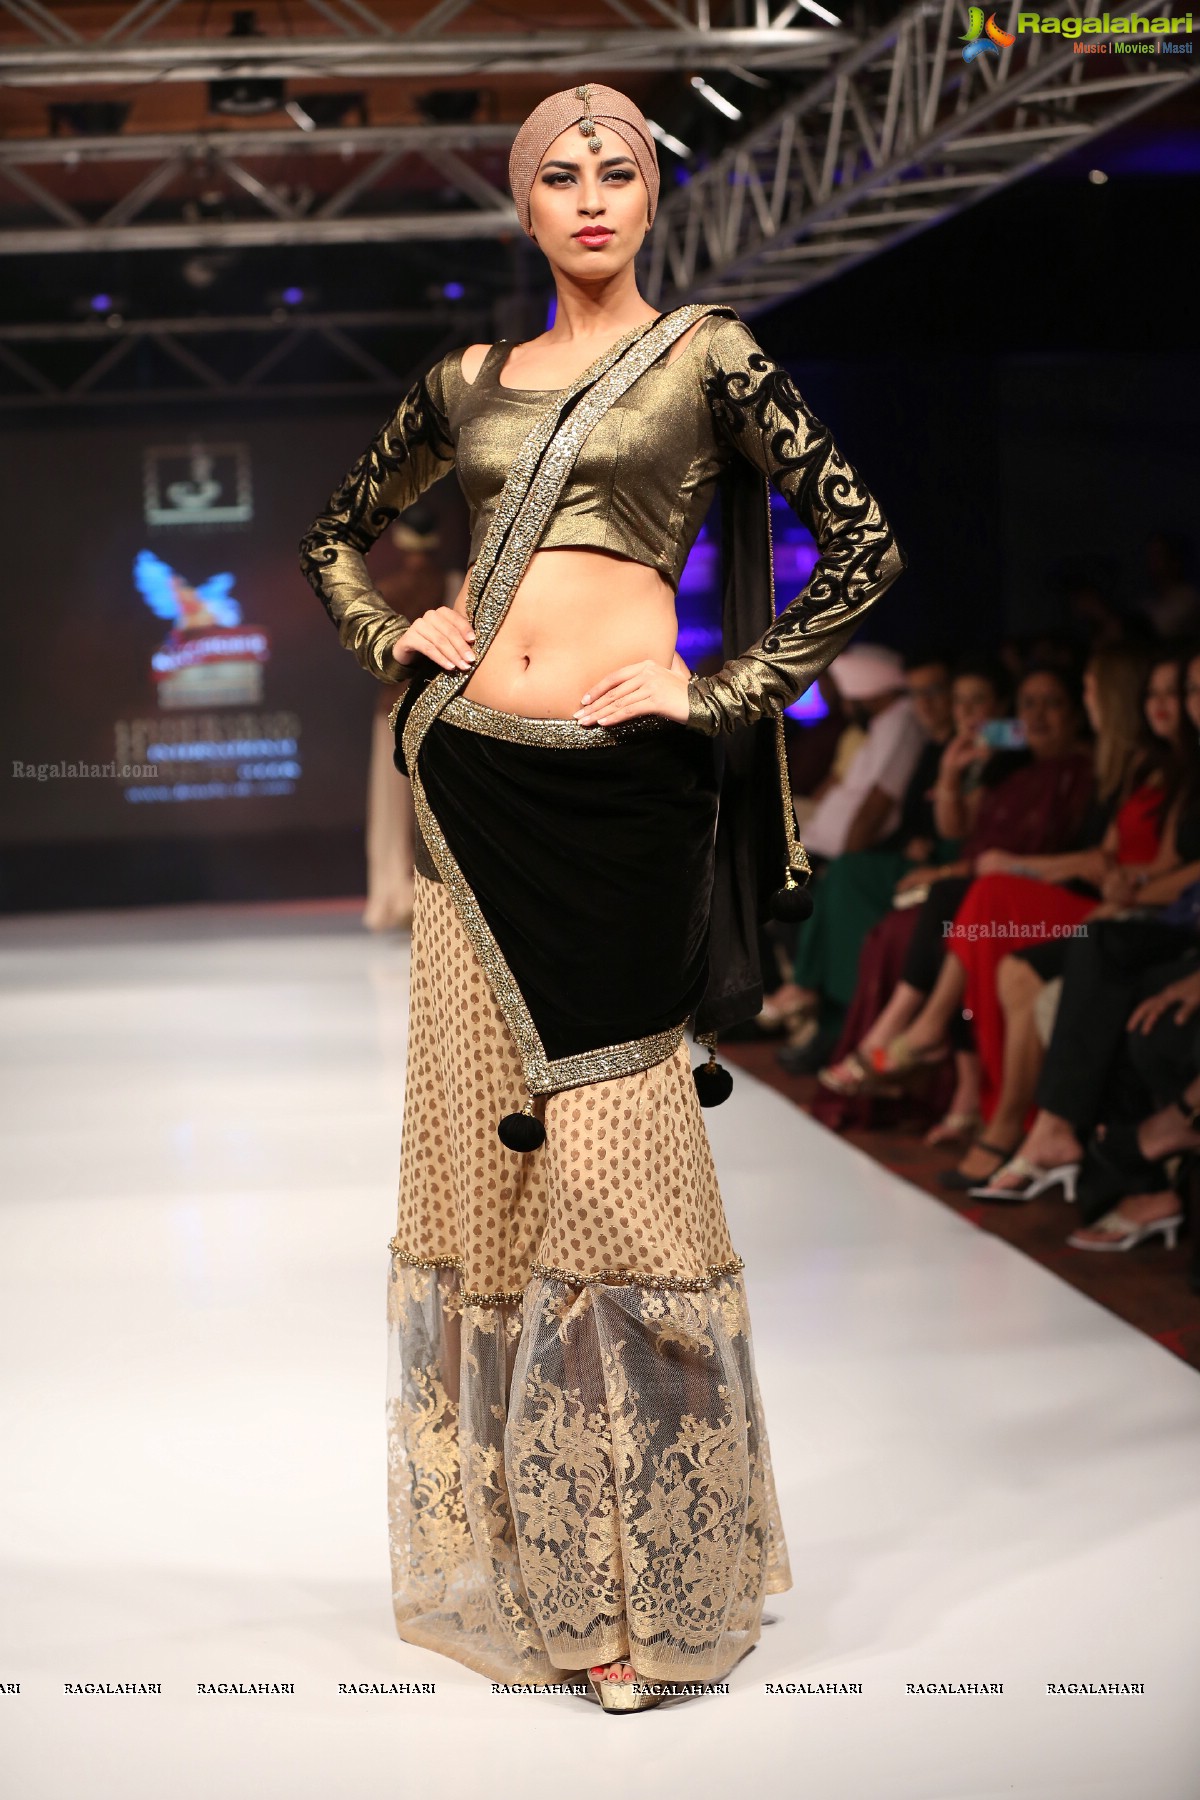 Kingfisher Ultra Hyderabad International Fashion Week Season 4 (Day 1)